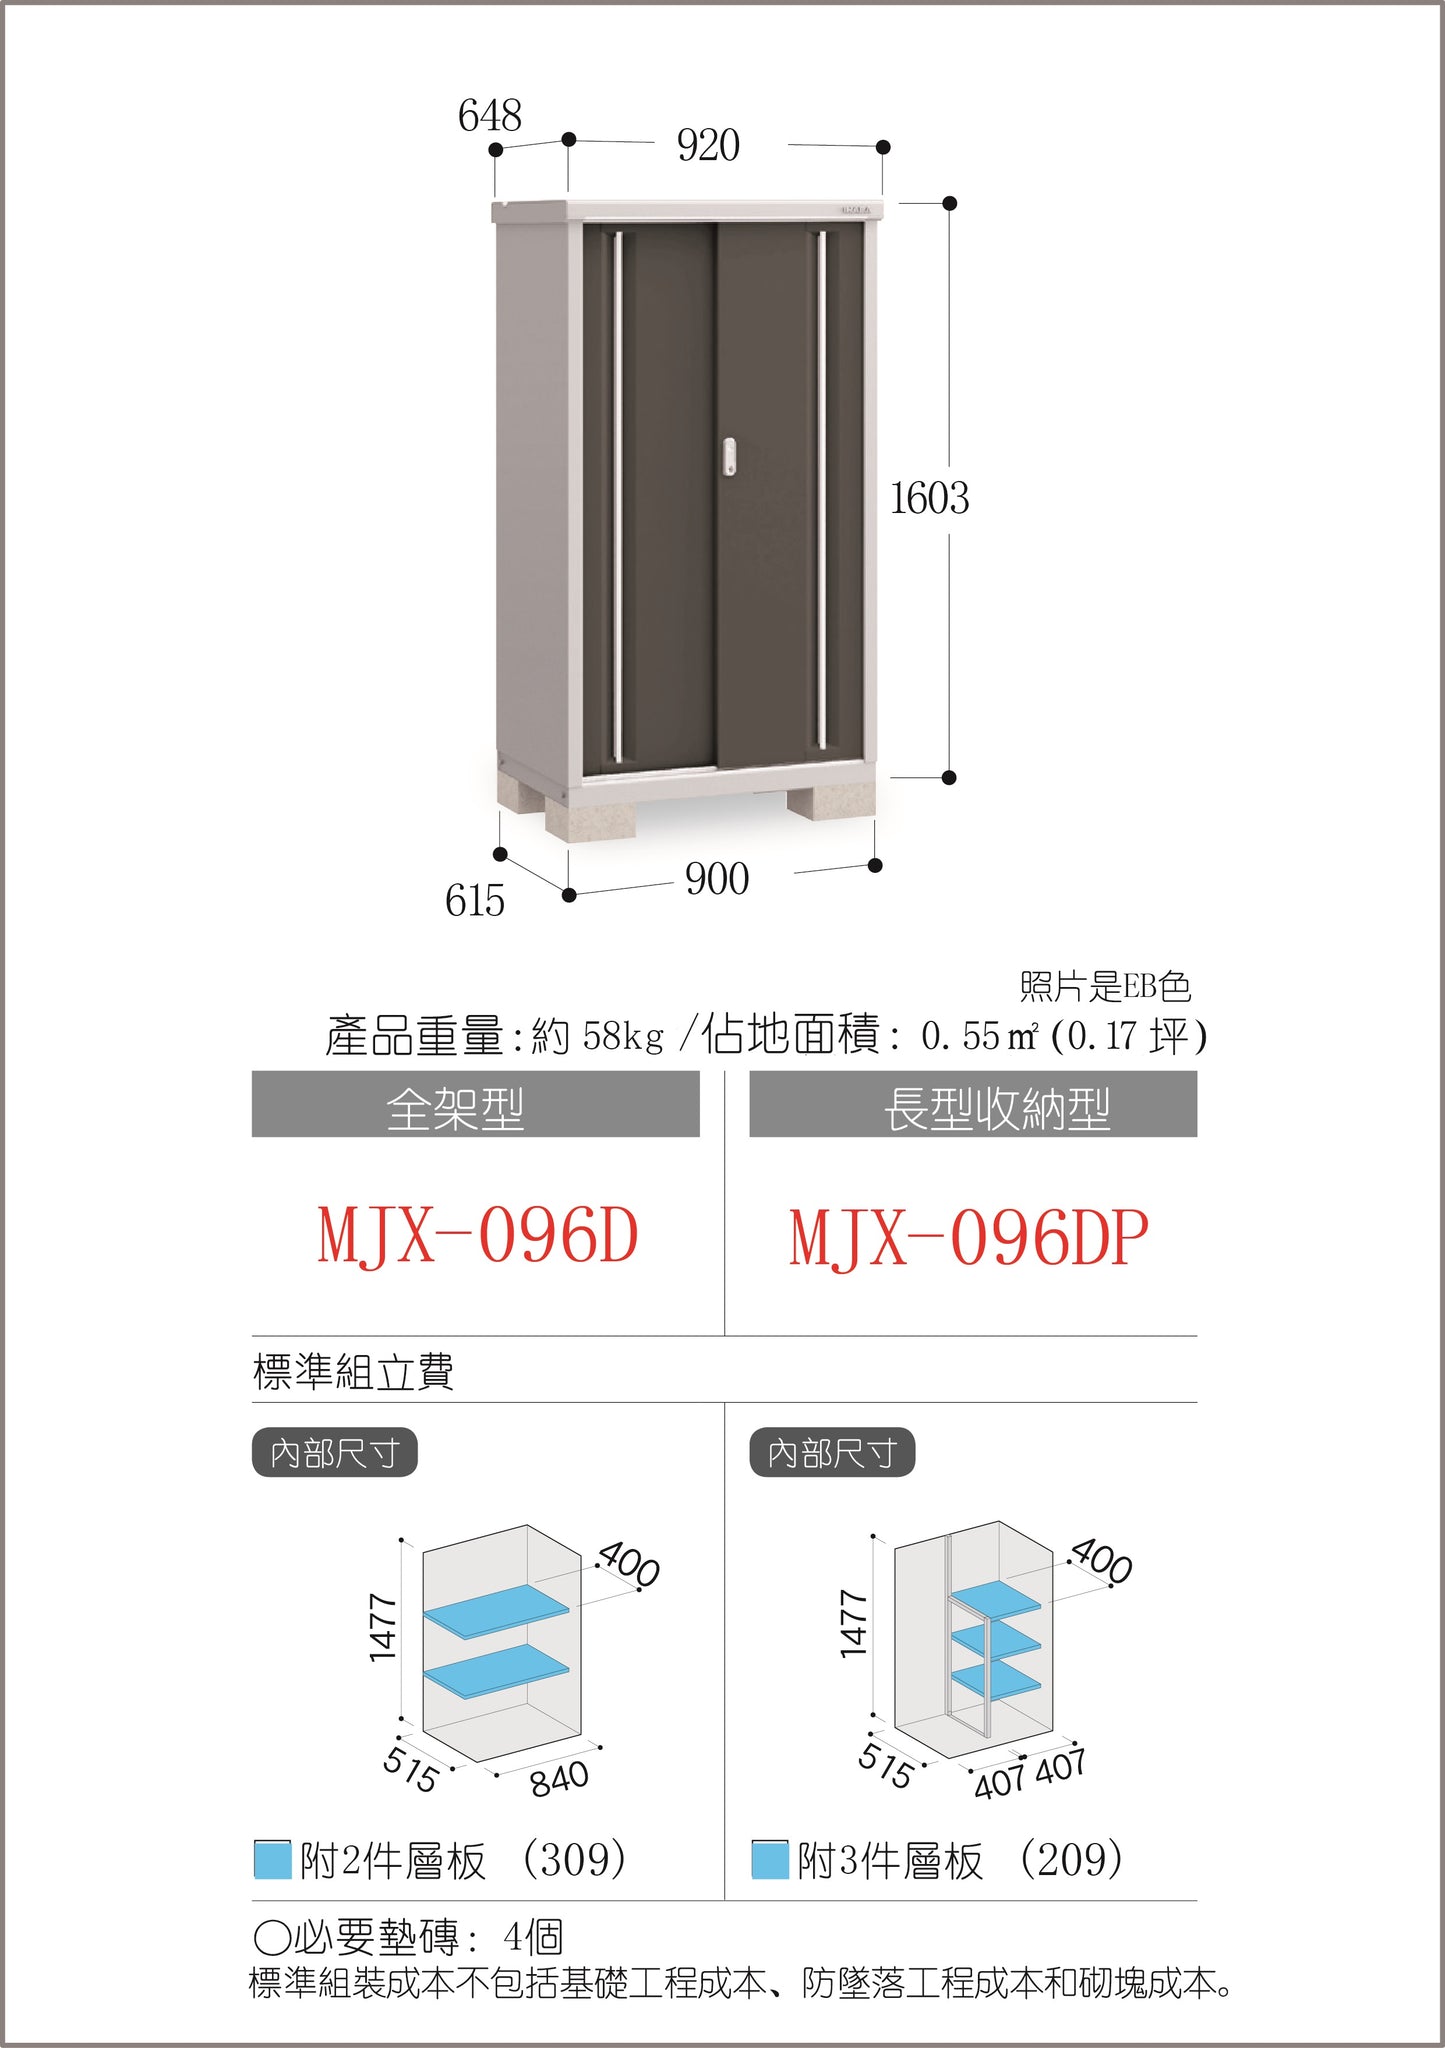 *Pre-order* Inaba Outdoor Storage MJX-096D (W920XD648XH1603mm) 0.956m3